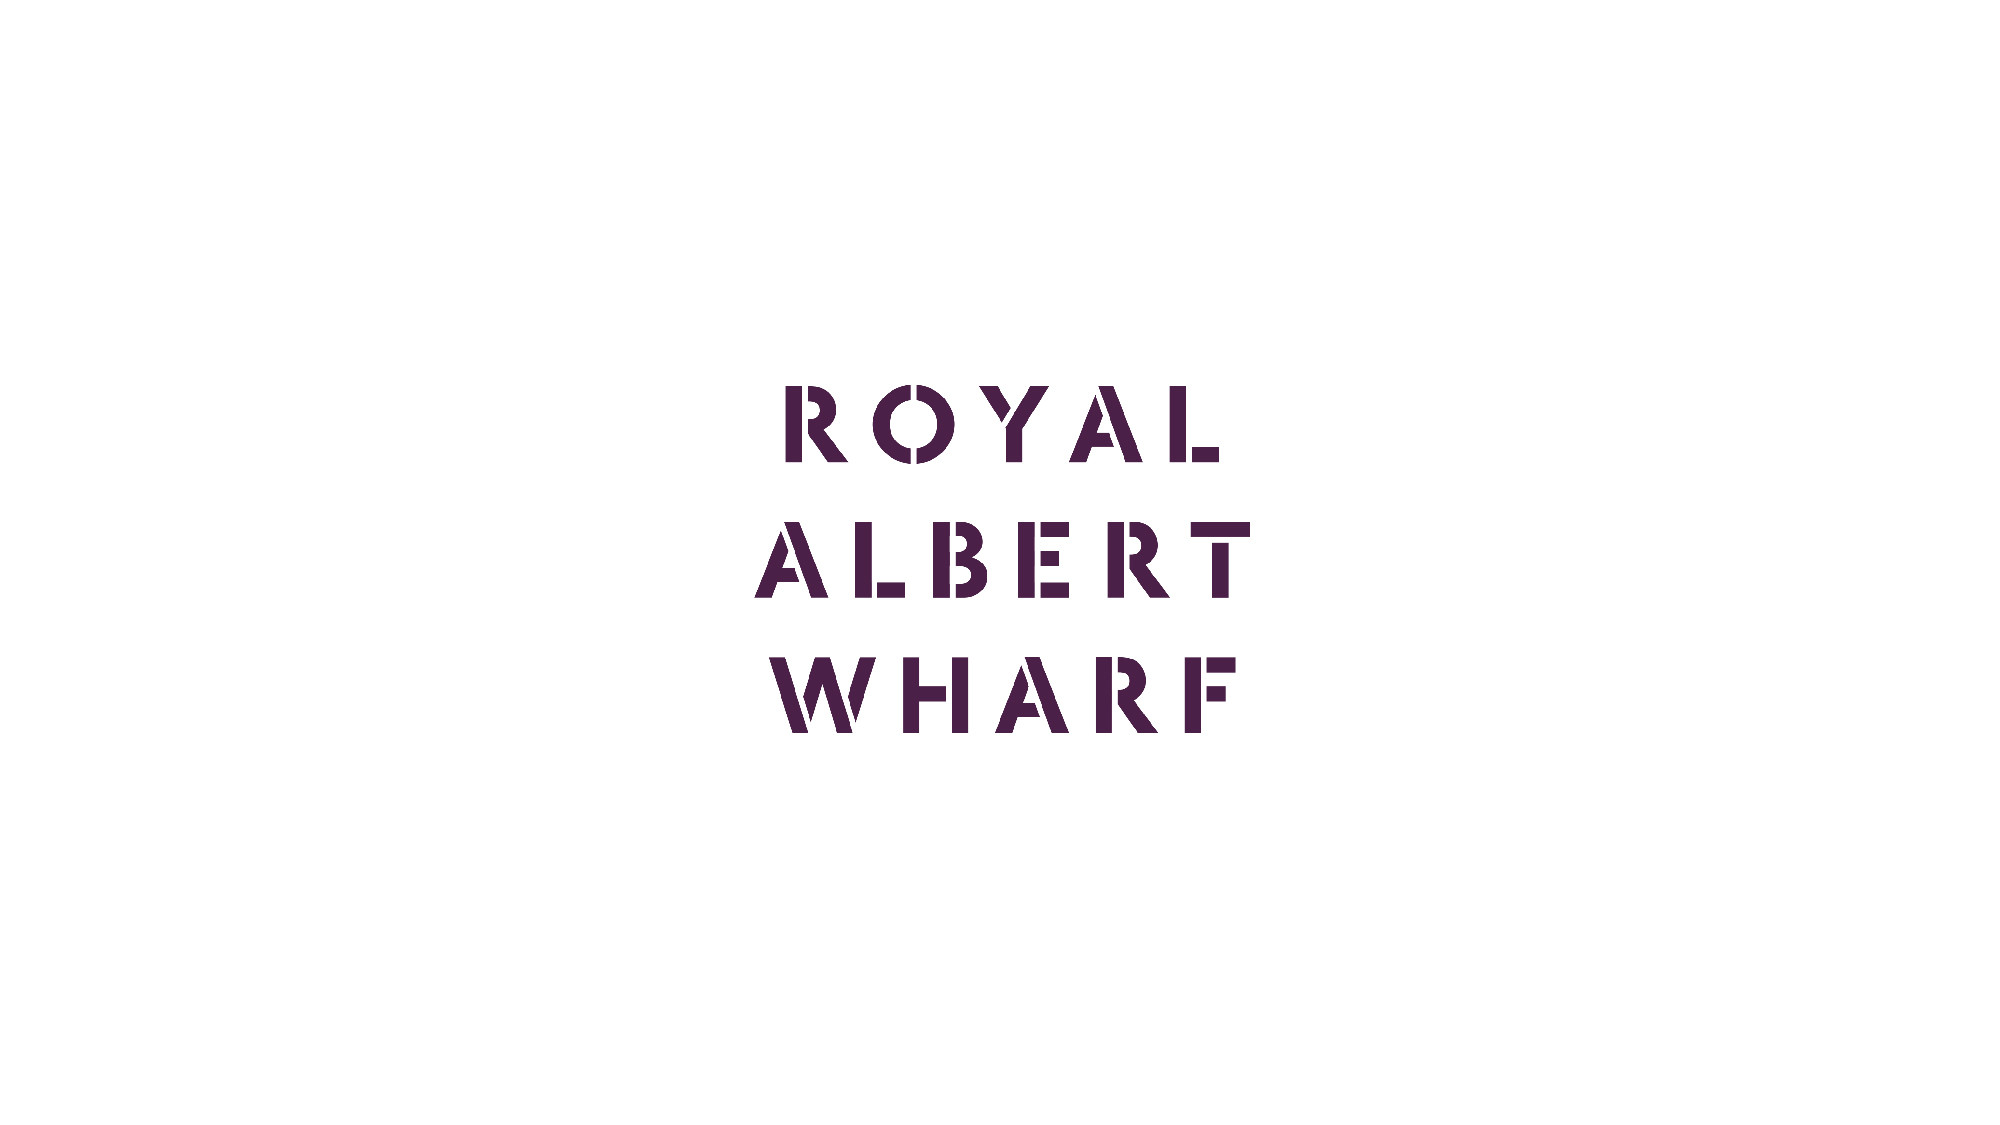 Royal Albert Wharf development logo cover Royal Docks E16